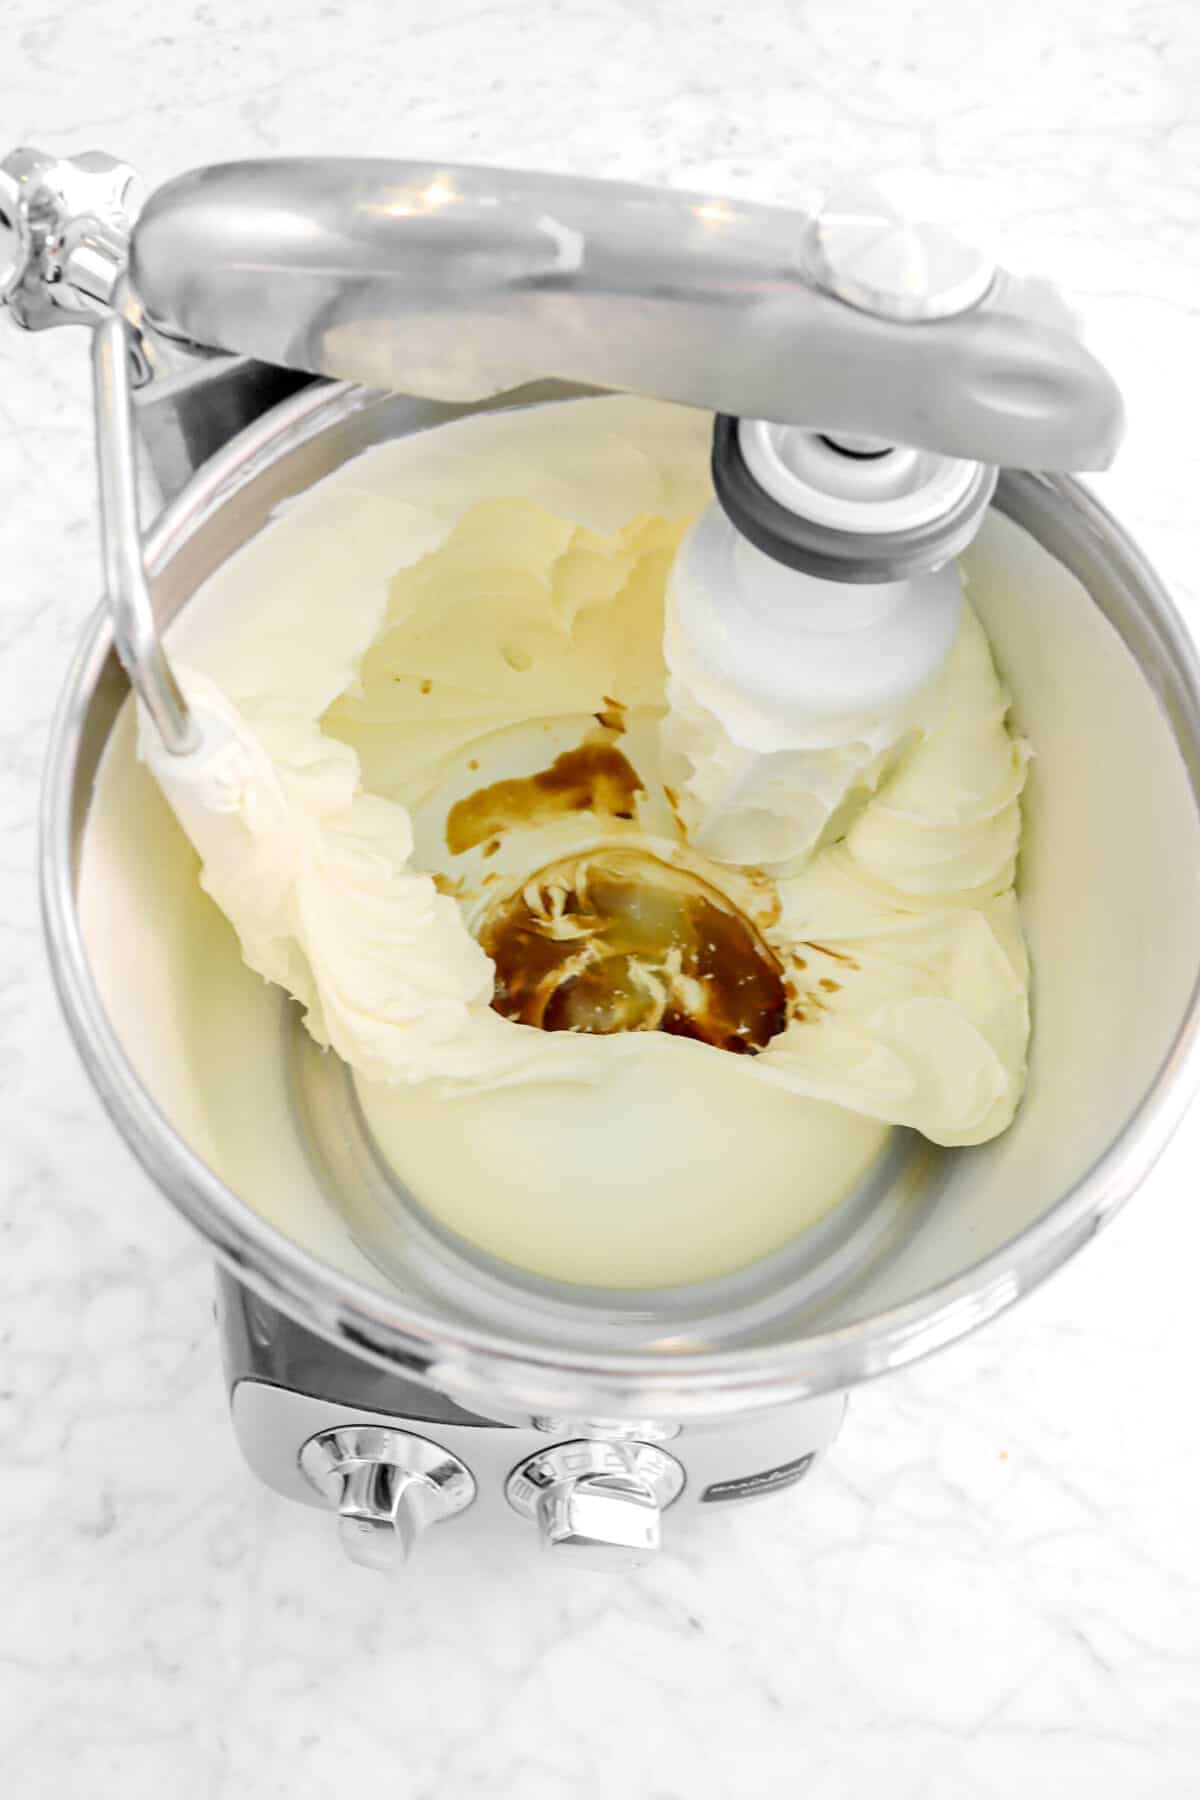 vanilla and lemon juice added to cream cheese mixture